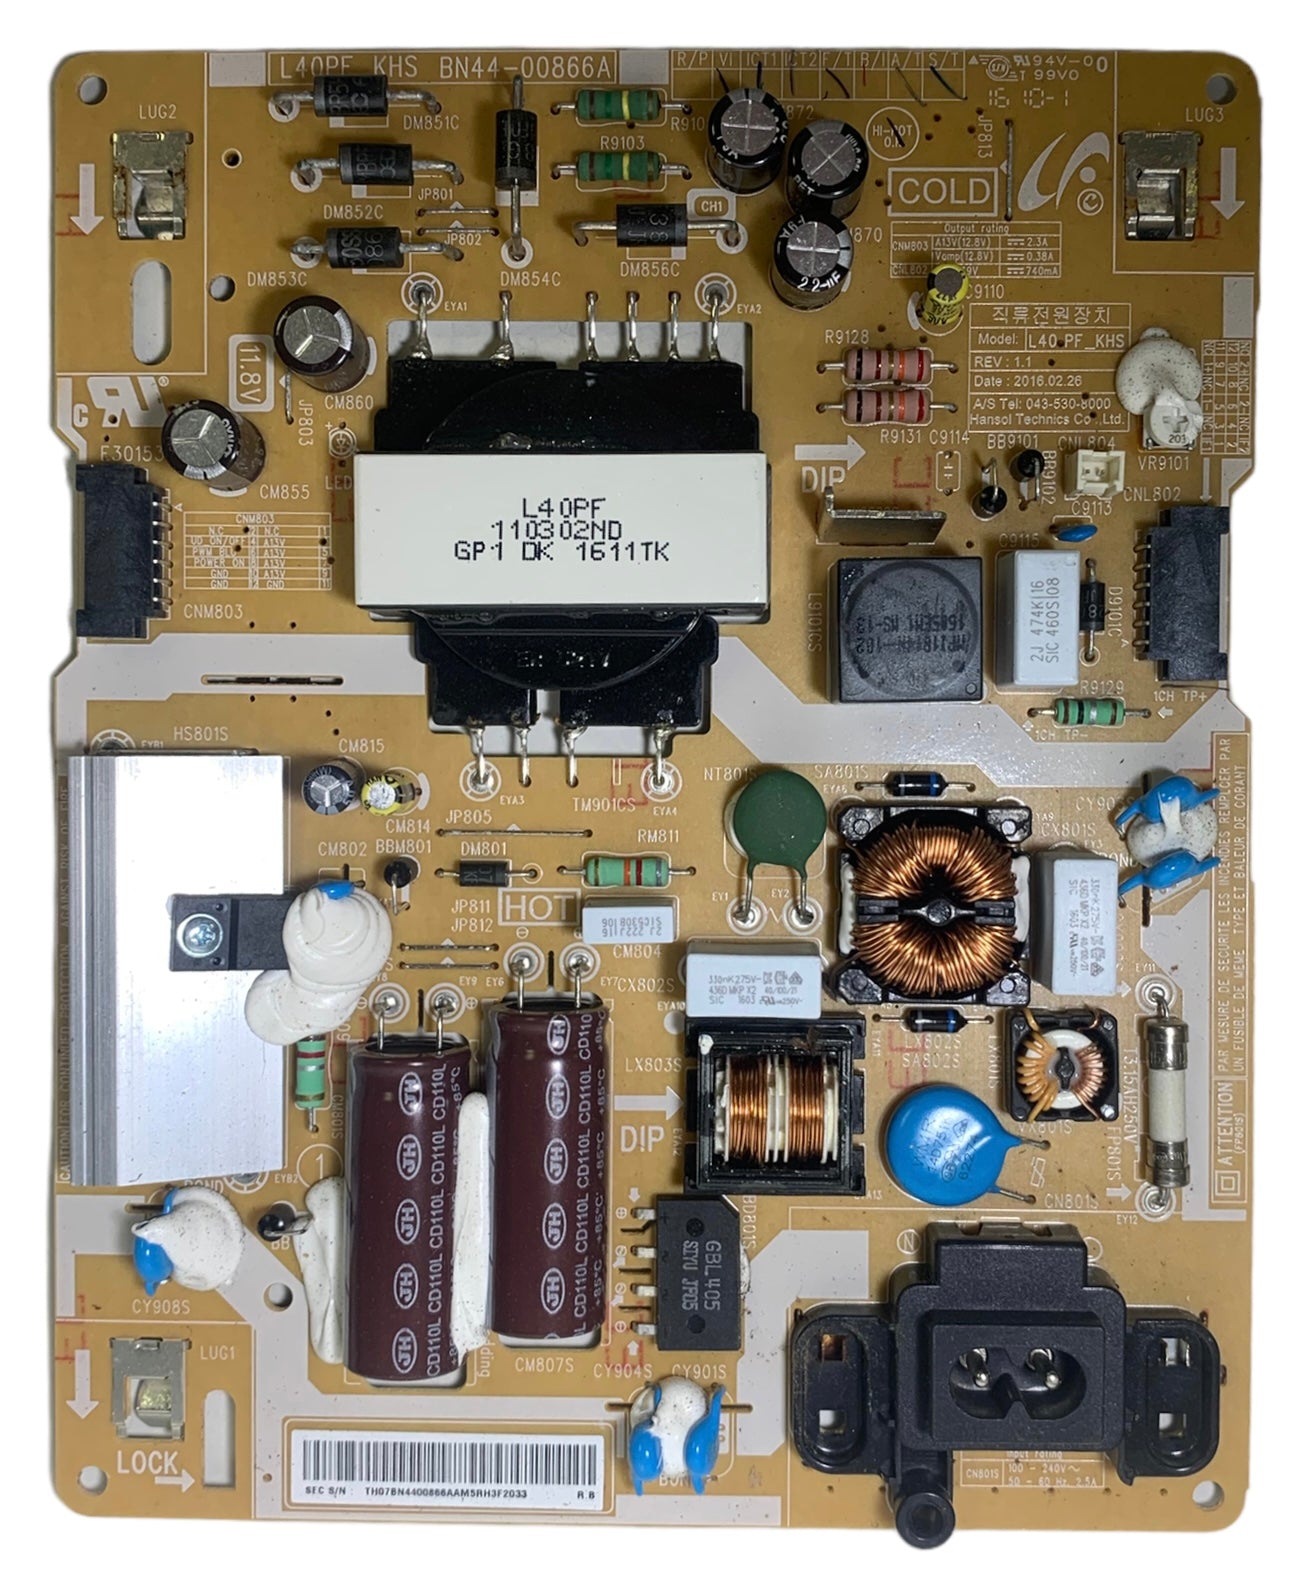 Samsung BN44-00866A (L40PF_KHS) Power Supply / LED Board